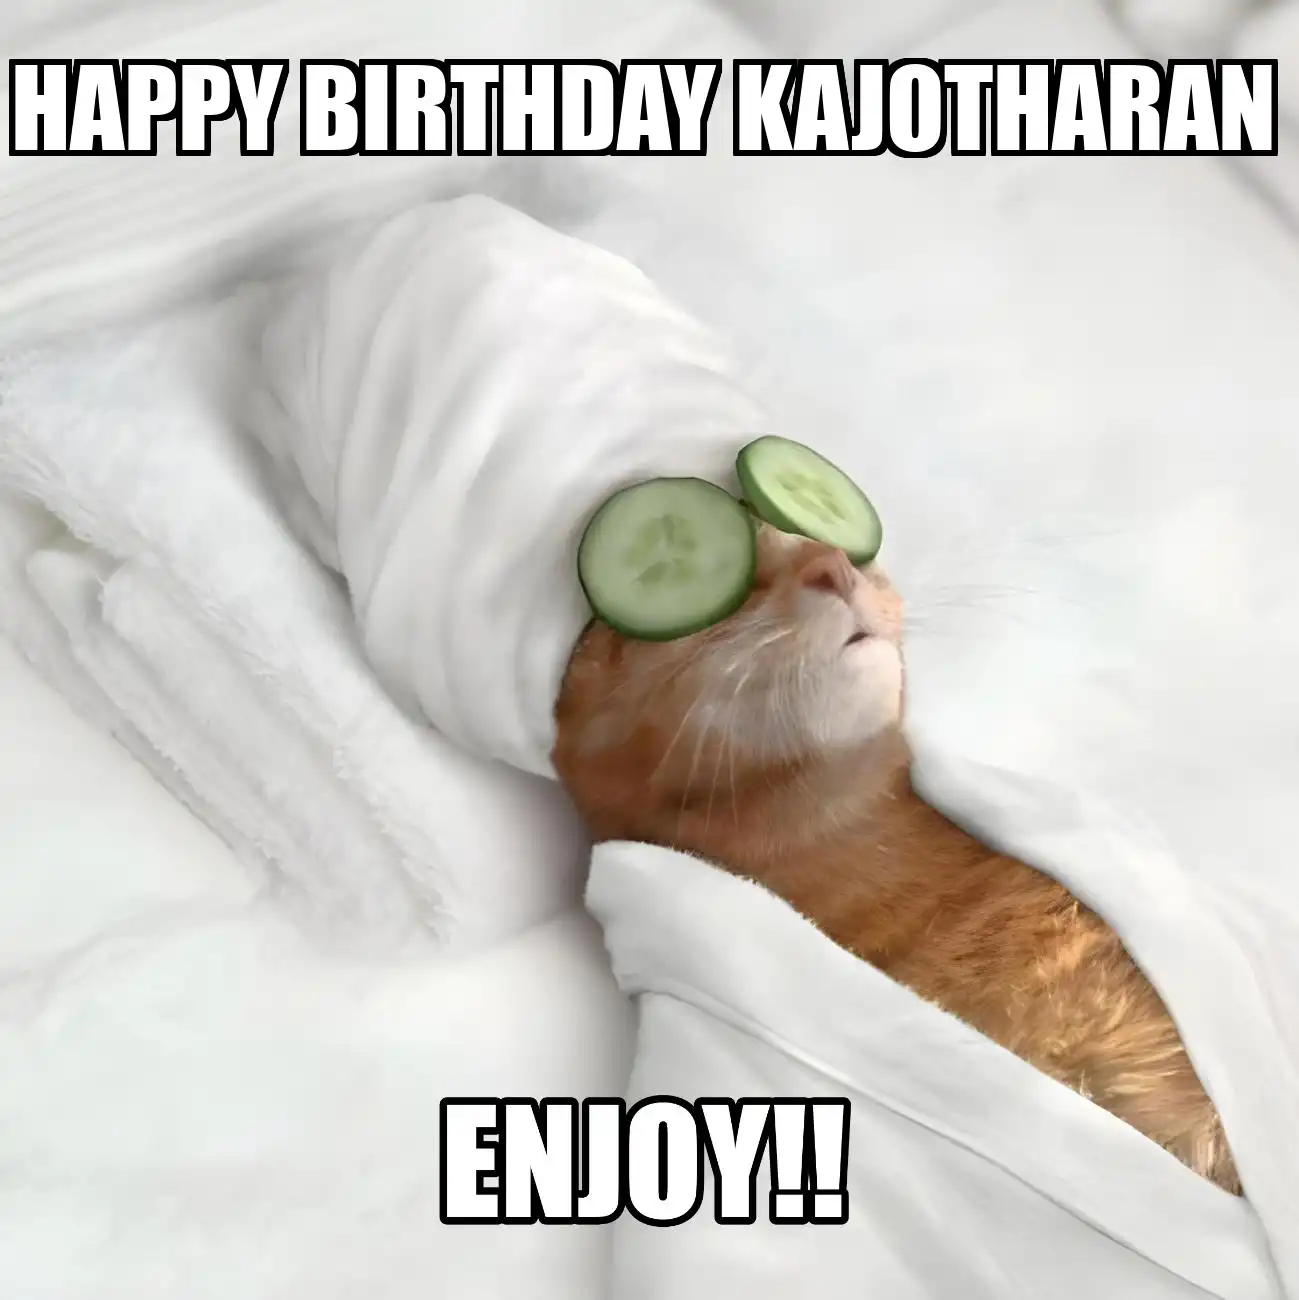 Happy Birthday Kajotharan Enjoy Cat Meme